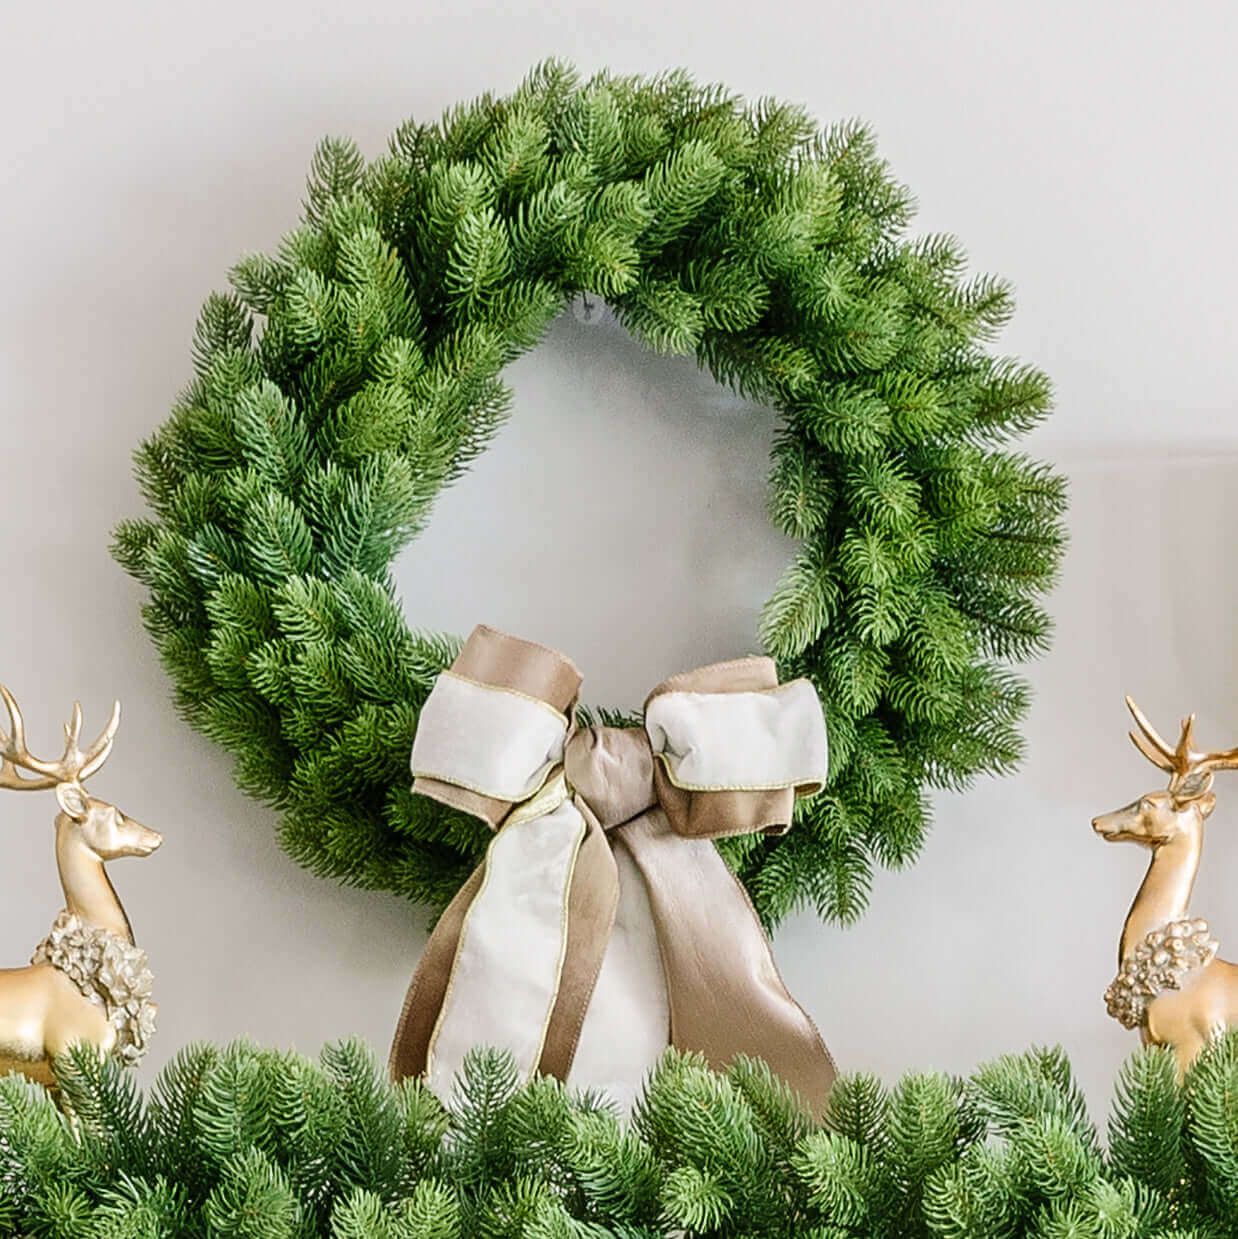 King of Christmas 36″ Royal Fir Wreath With 150 LED Lights (Plug Operated)